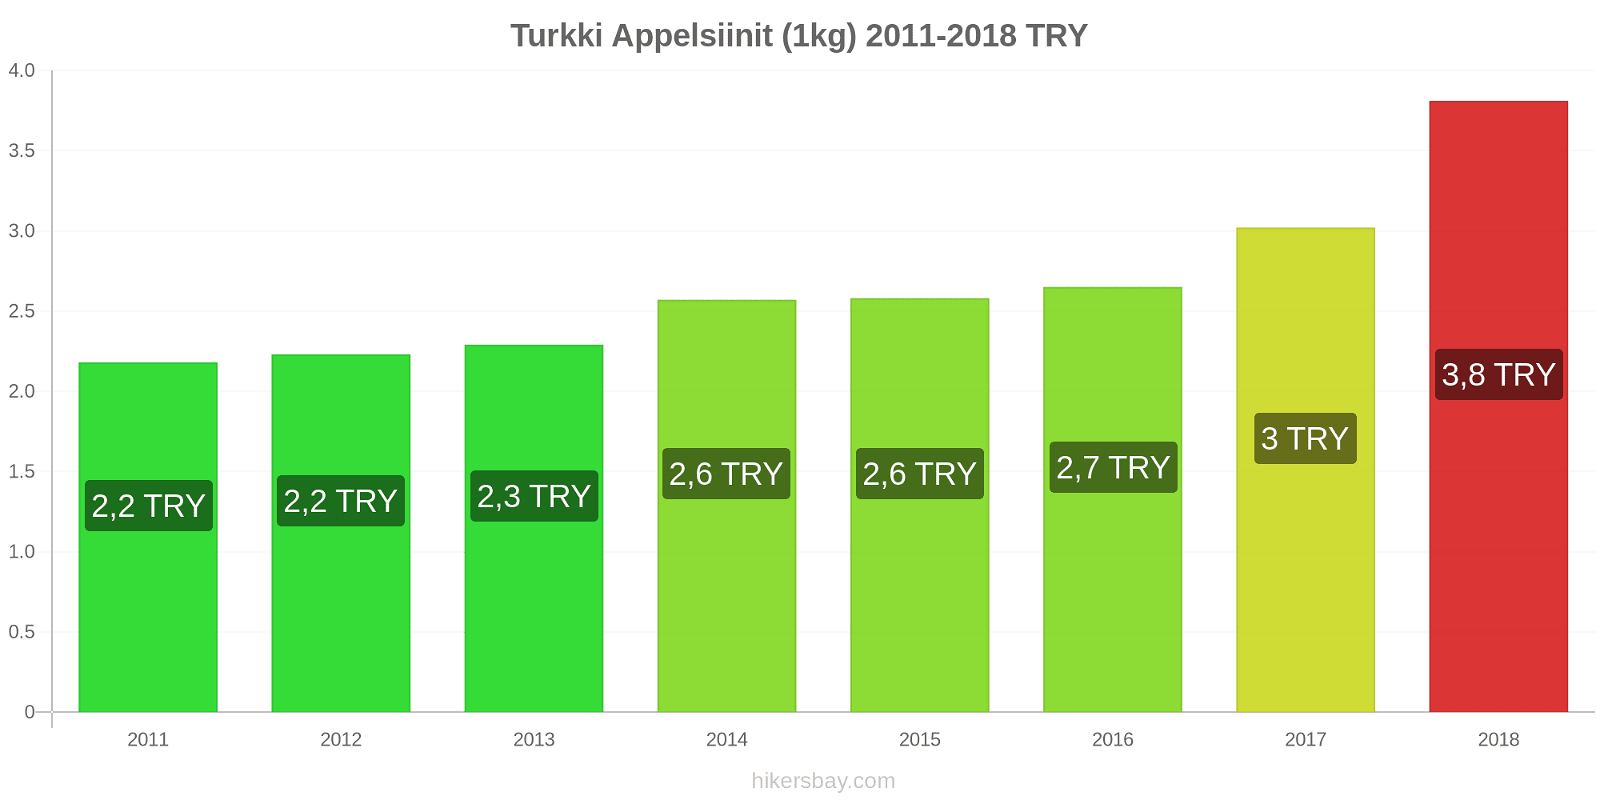 Turkki hintojen muutokset Appelsiinit (1kg) hikersbay.com